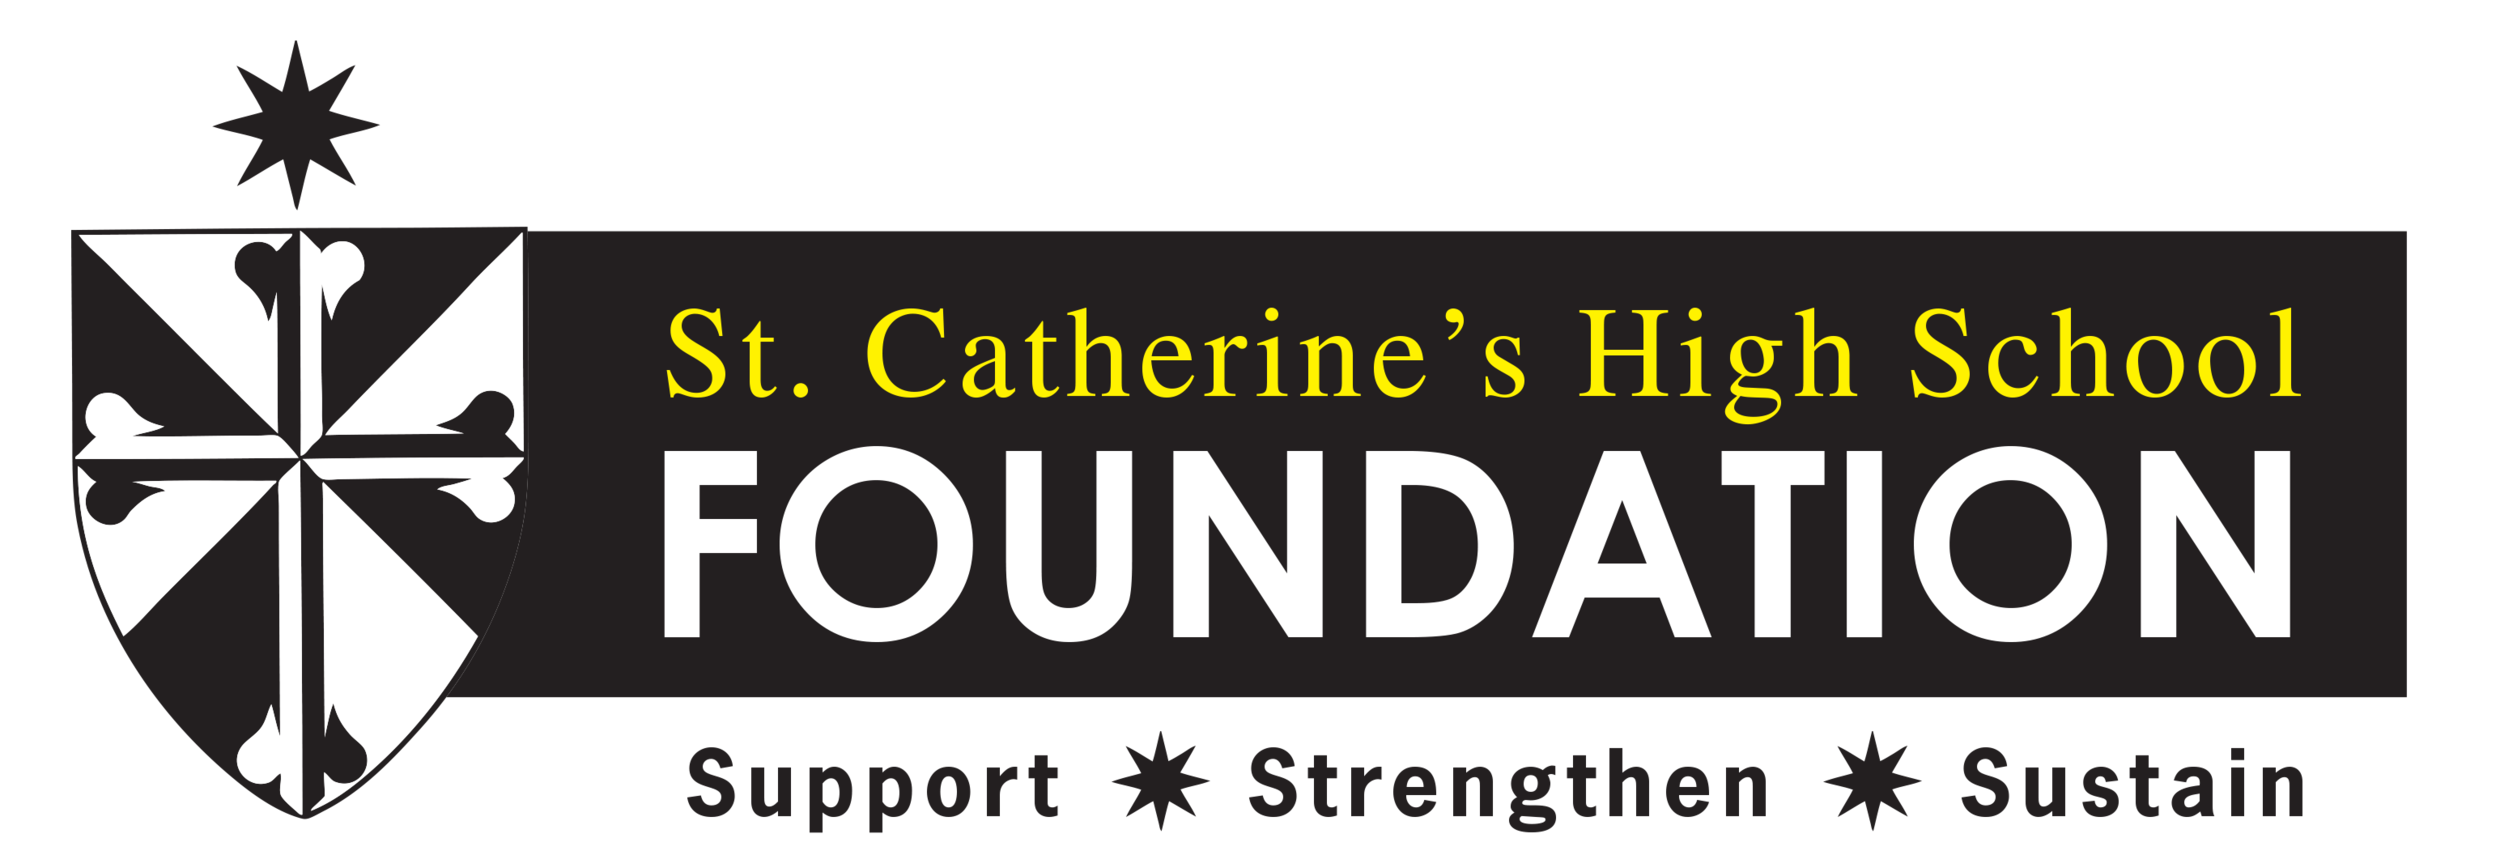 Foundation Logo_FINAL.png